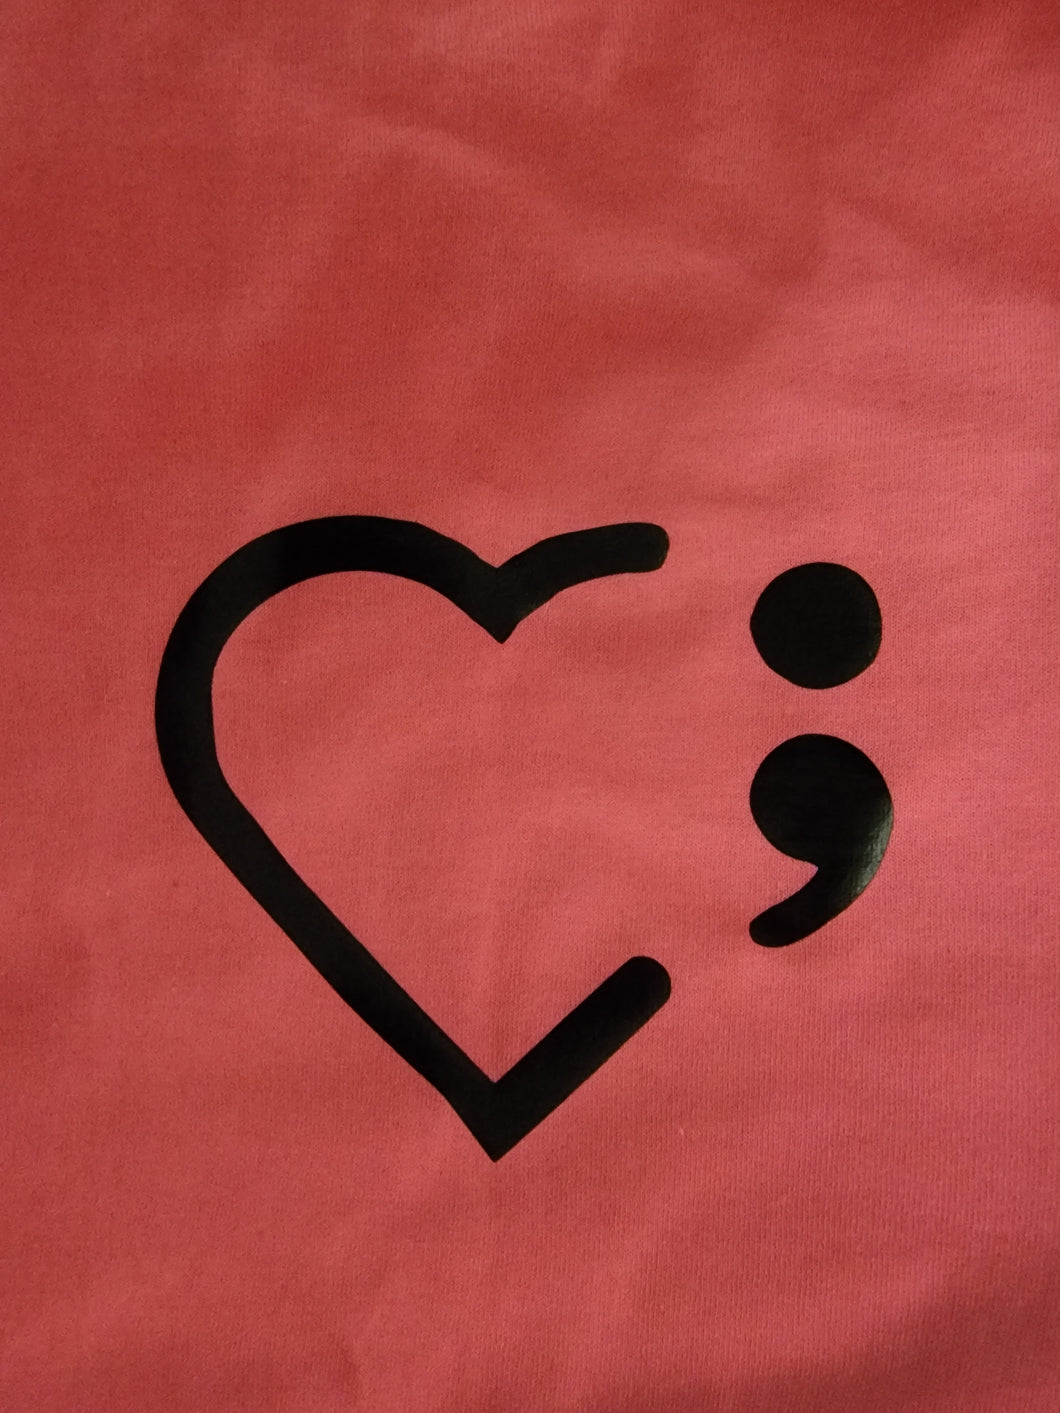 Semicolon Heart w/ sleeve